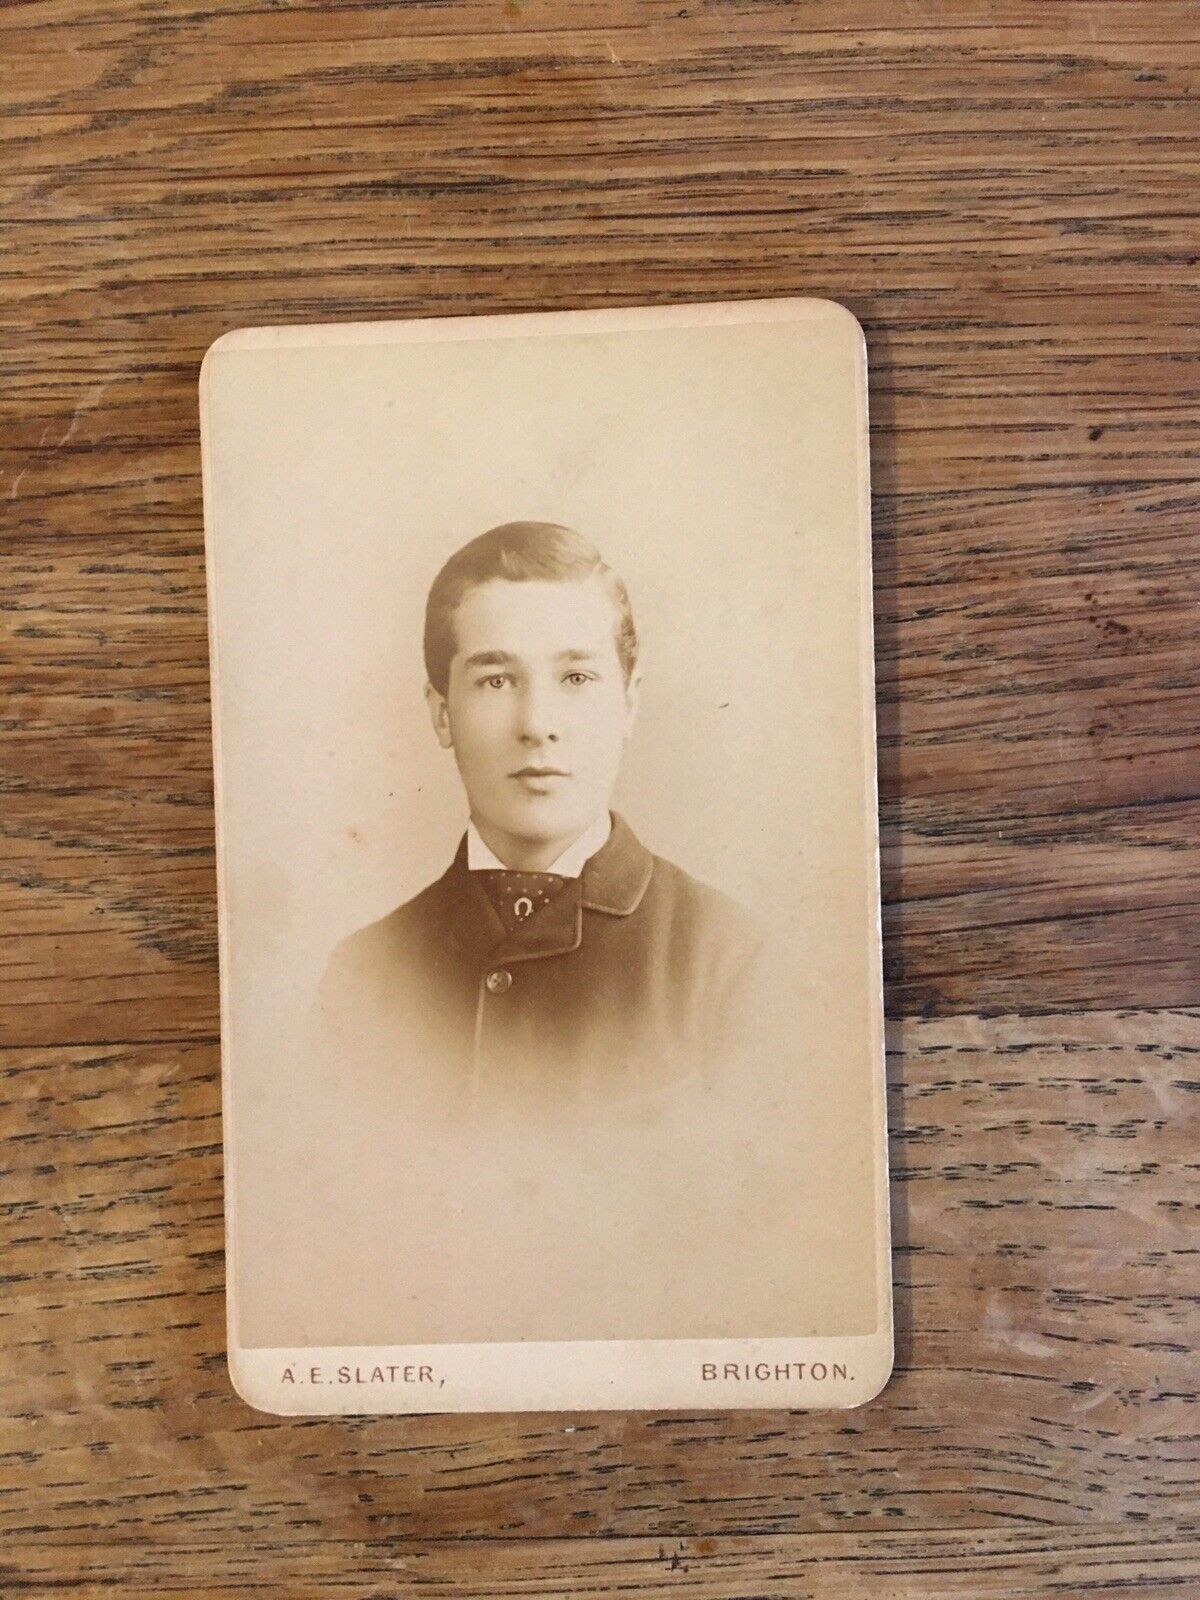 Brighton-Smart Young Man c.1880s-CDV Carte de Visite Victorian Photo.